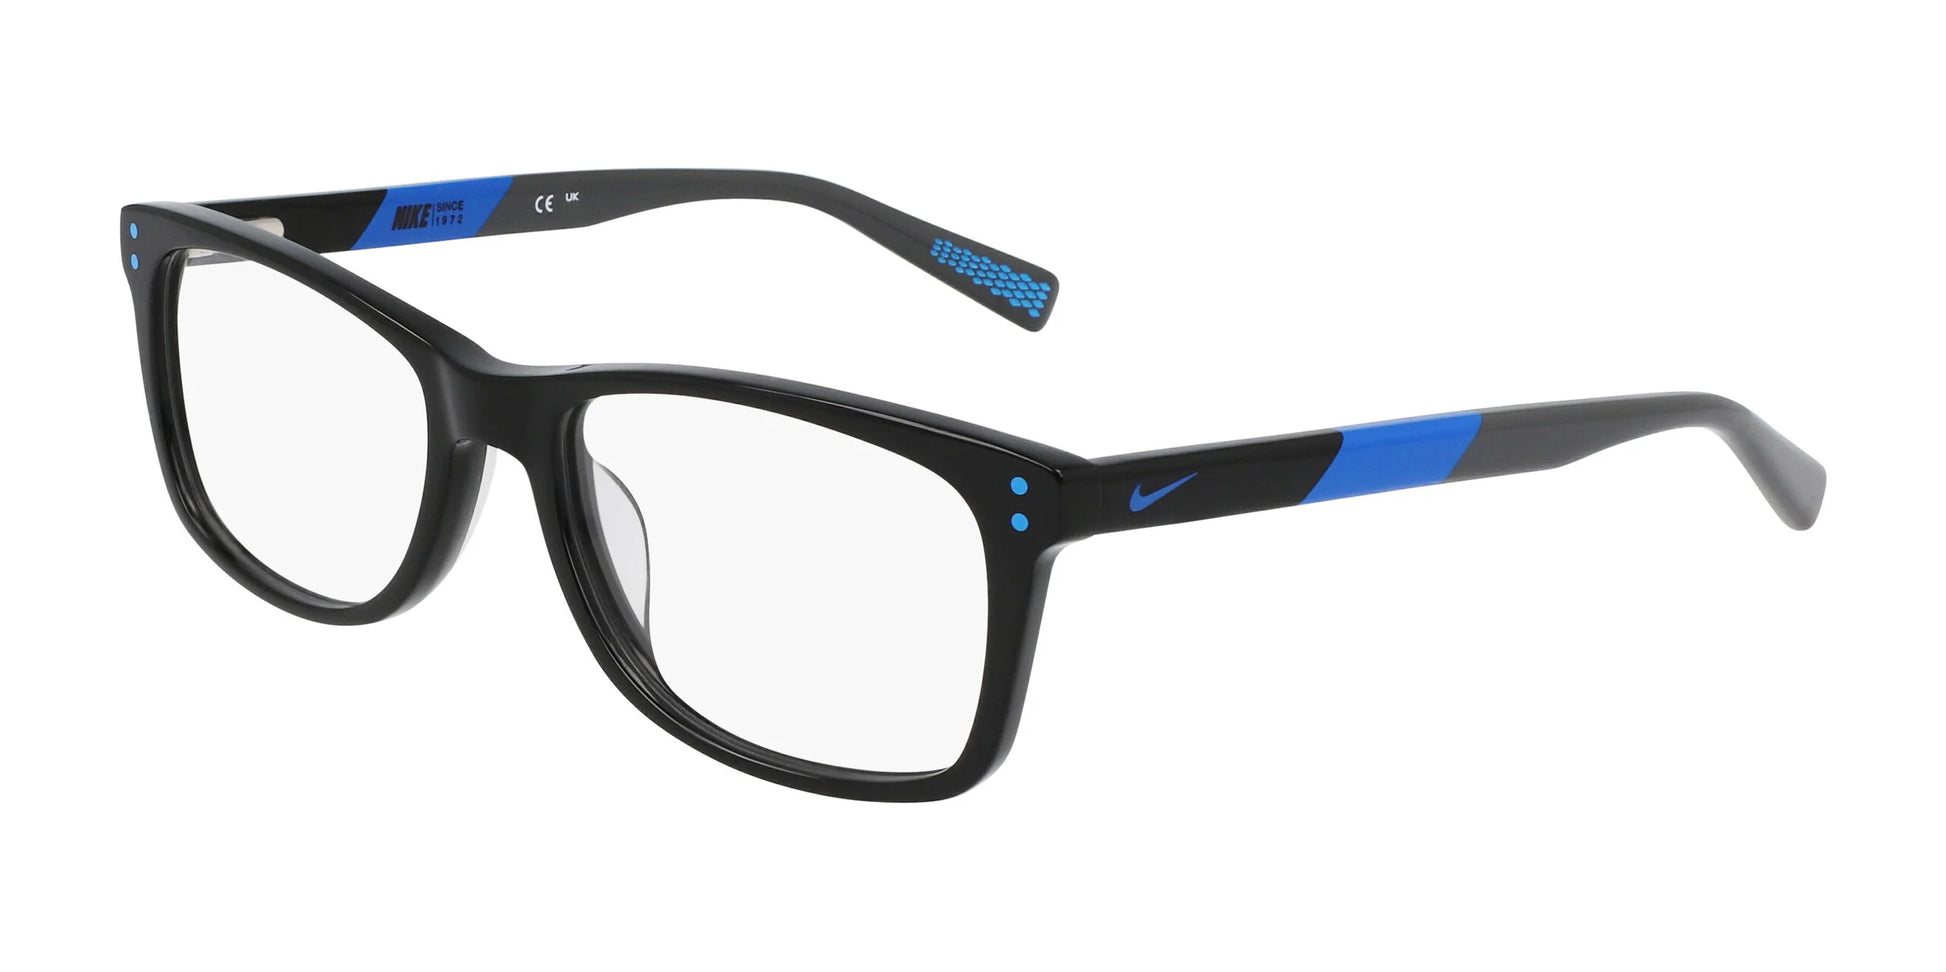 Nike 5538 Eyeglasses Black-Photo Blue